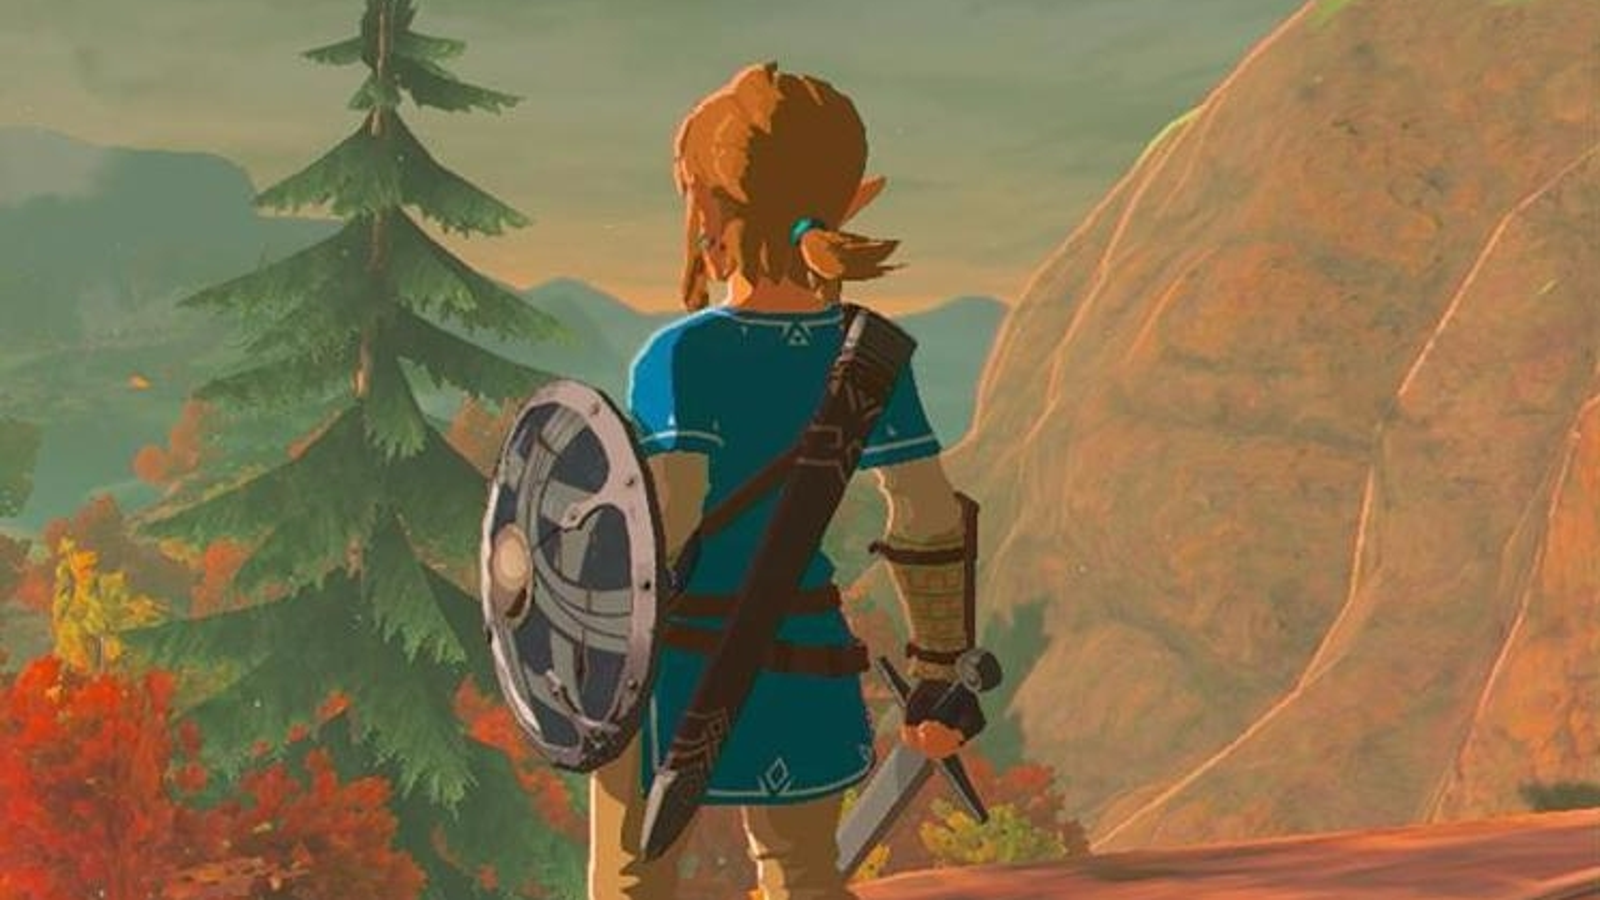 Hablar asignar Condicional Zelda: Breath of the Wild already up and running on PC | Eurogamer.net